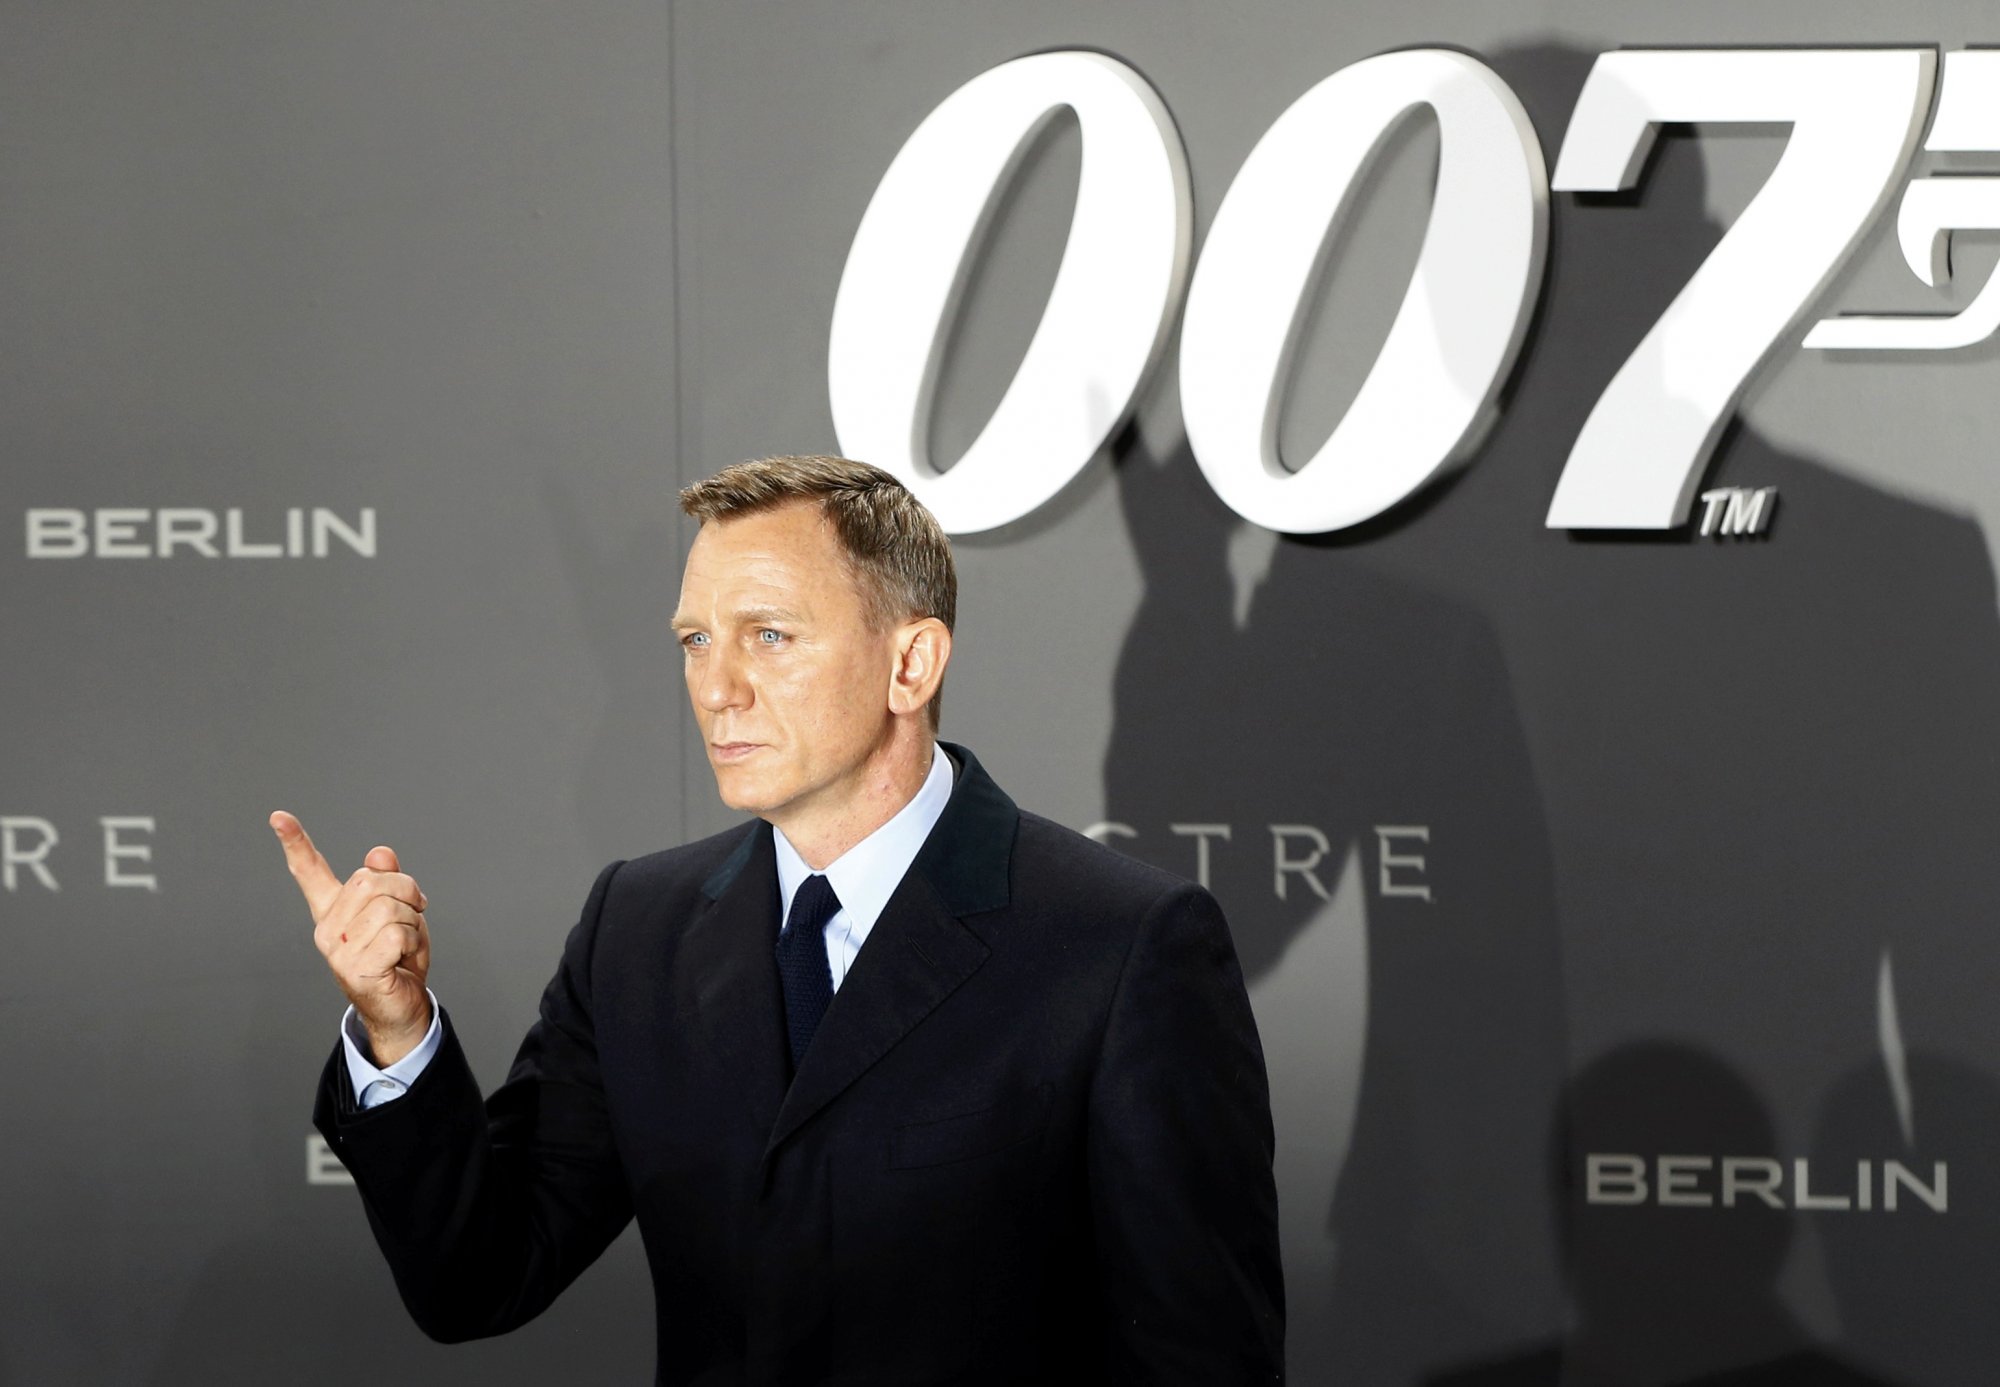 James Bond: Η Βρετανία κυκλοφορεί συλλεκτικά νομίσματα με την εικόνα του